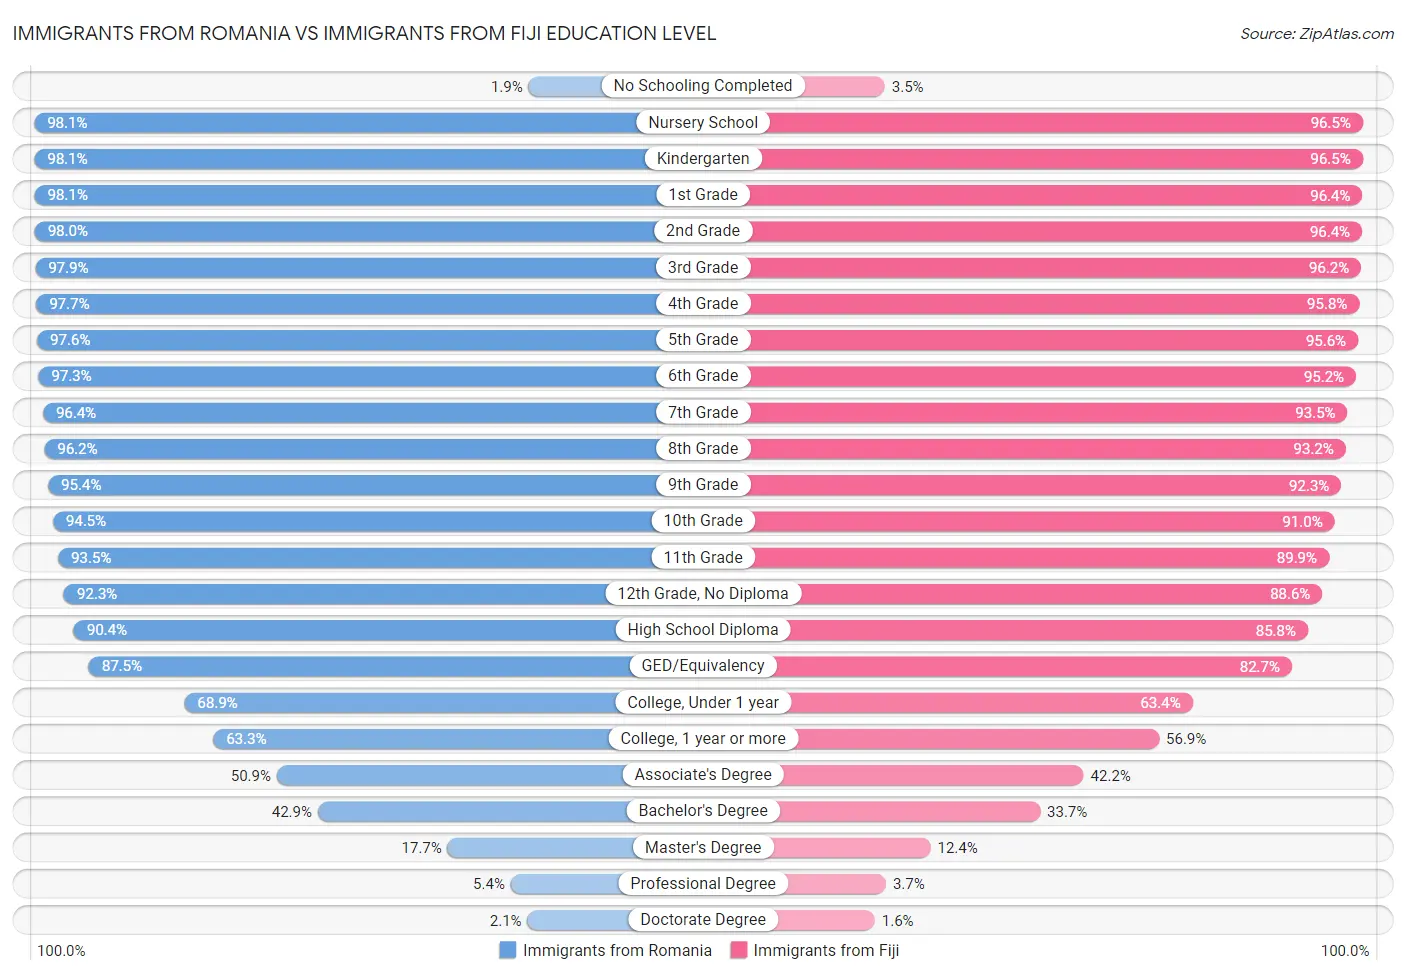 Immigrants from Romania vs Immigrants from Fiji Education Level